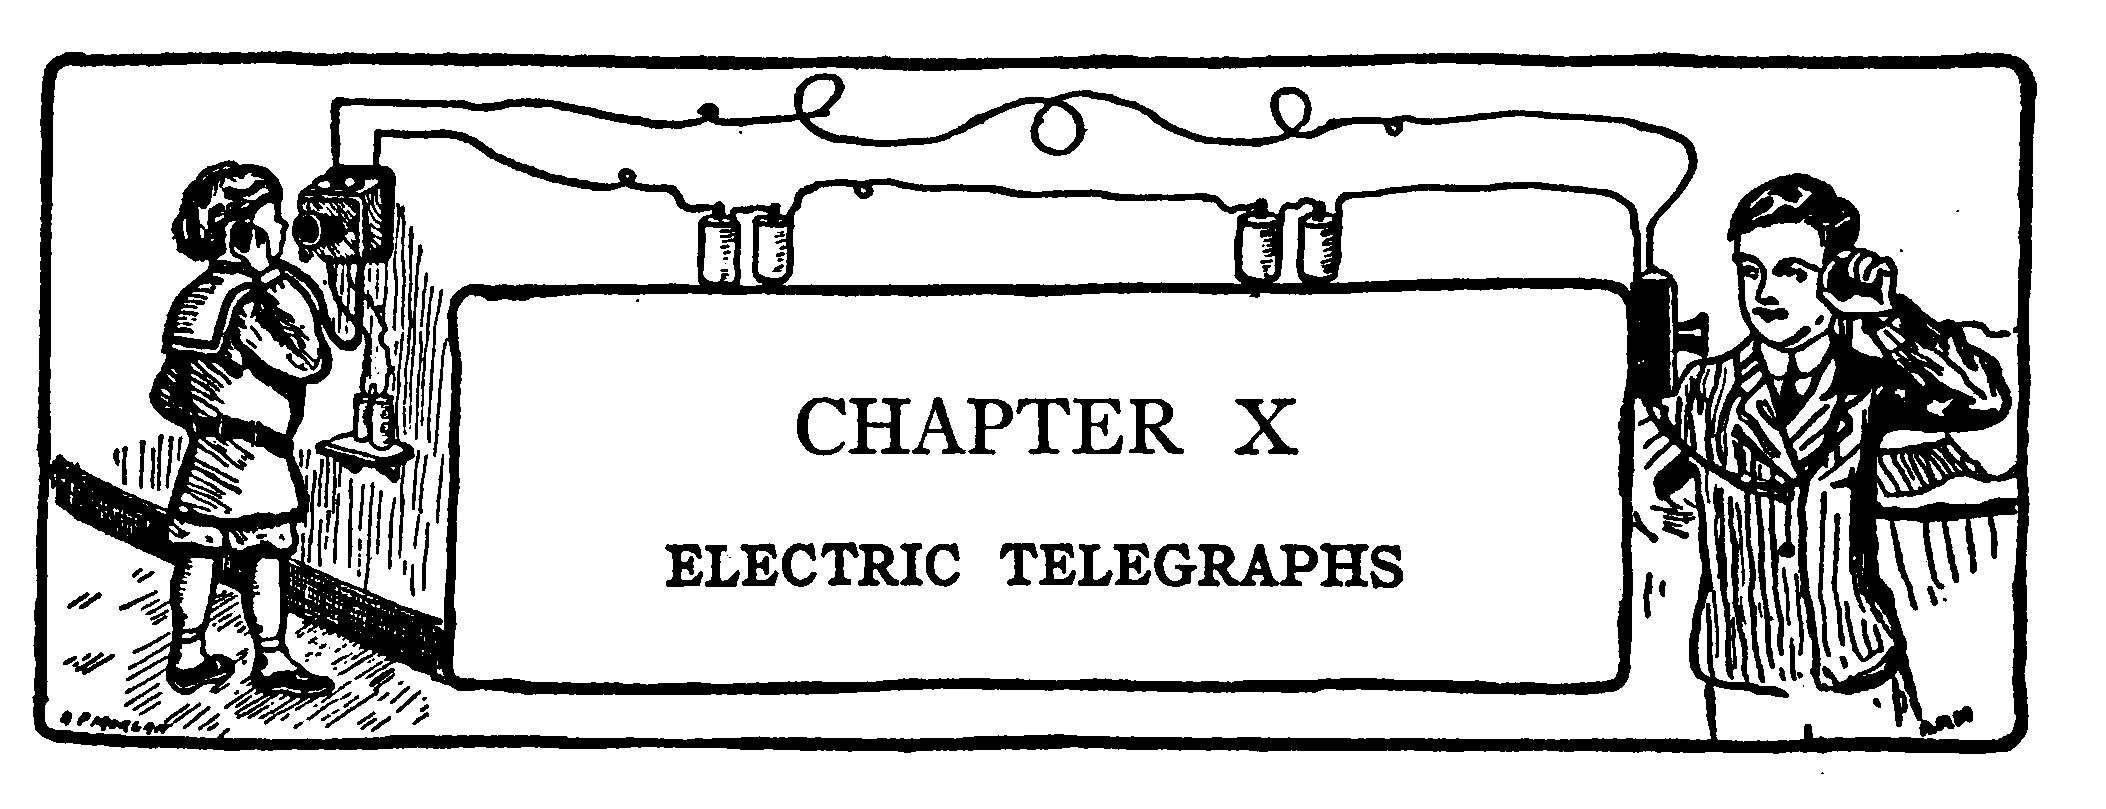 ELECTRIC TELEGRAPHS